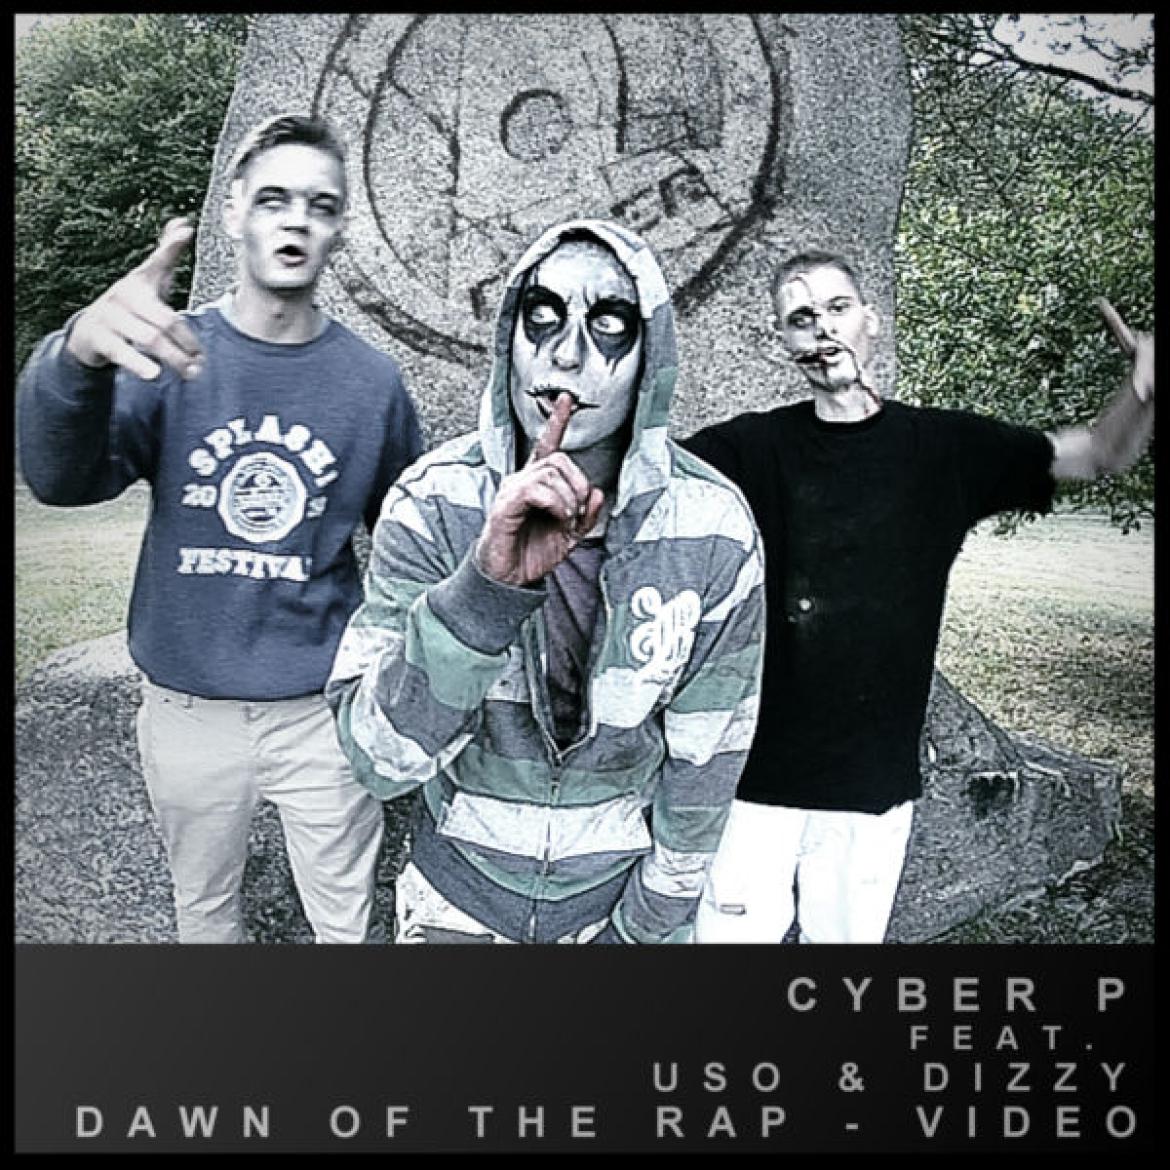 Cyber P feat. USO & Dizzy - Dawn of the Rap